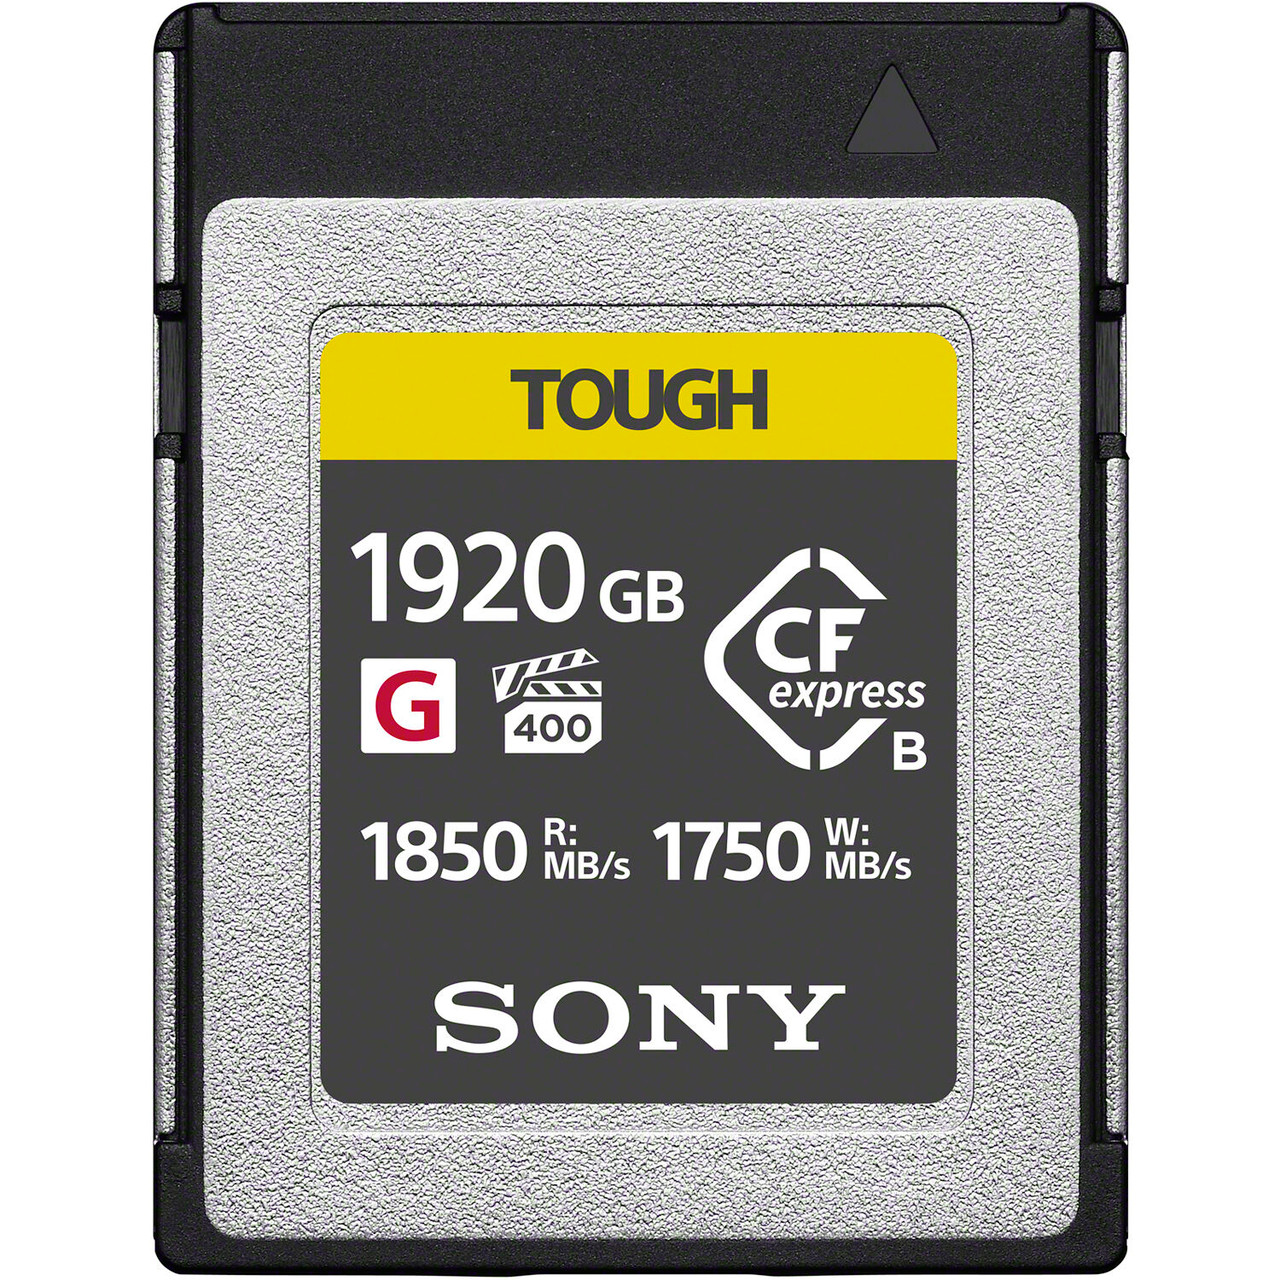 Sony CEB-G1920T 1920GB CFexpress Type B TOUGH Memory Card